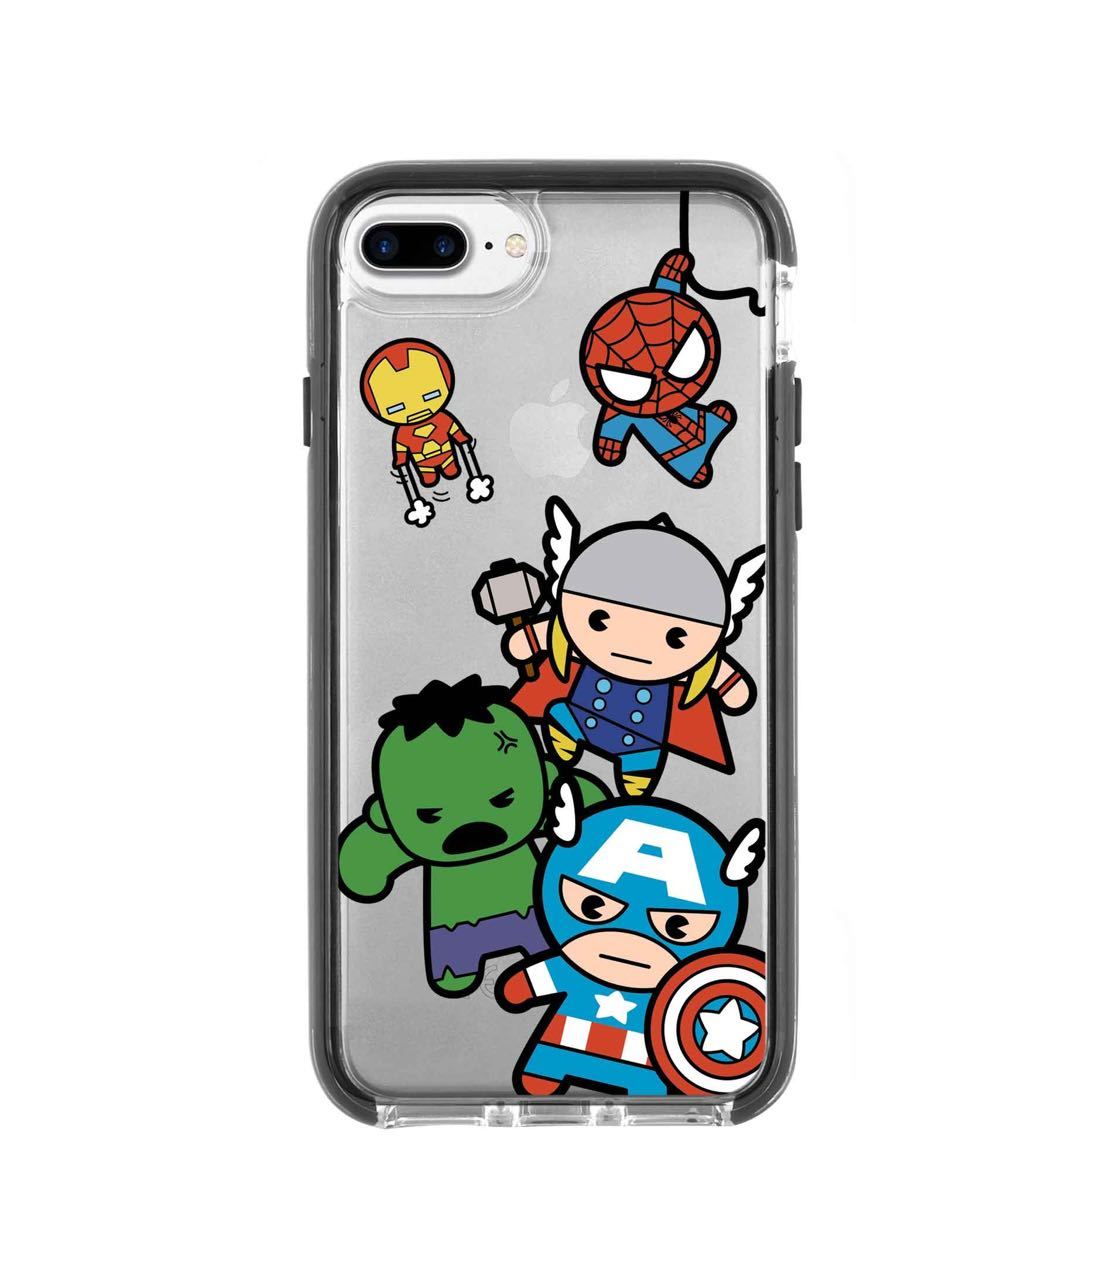 Kawaii Art Marvel Comics - Extreme Phone Case for iPhone 7 Plus